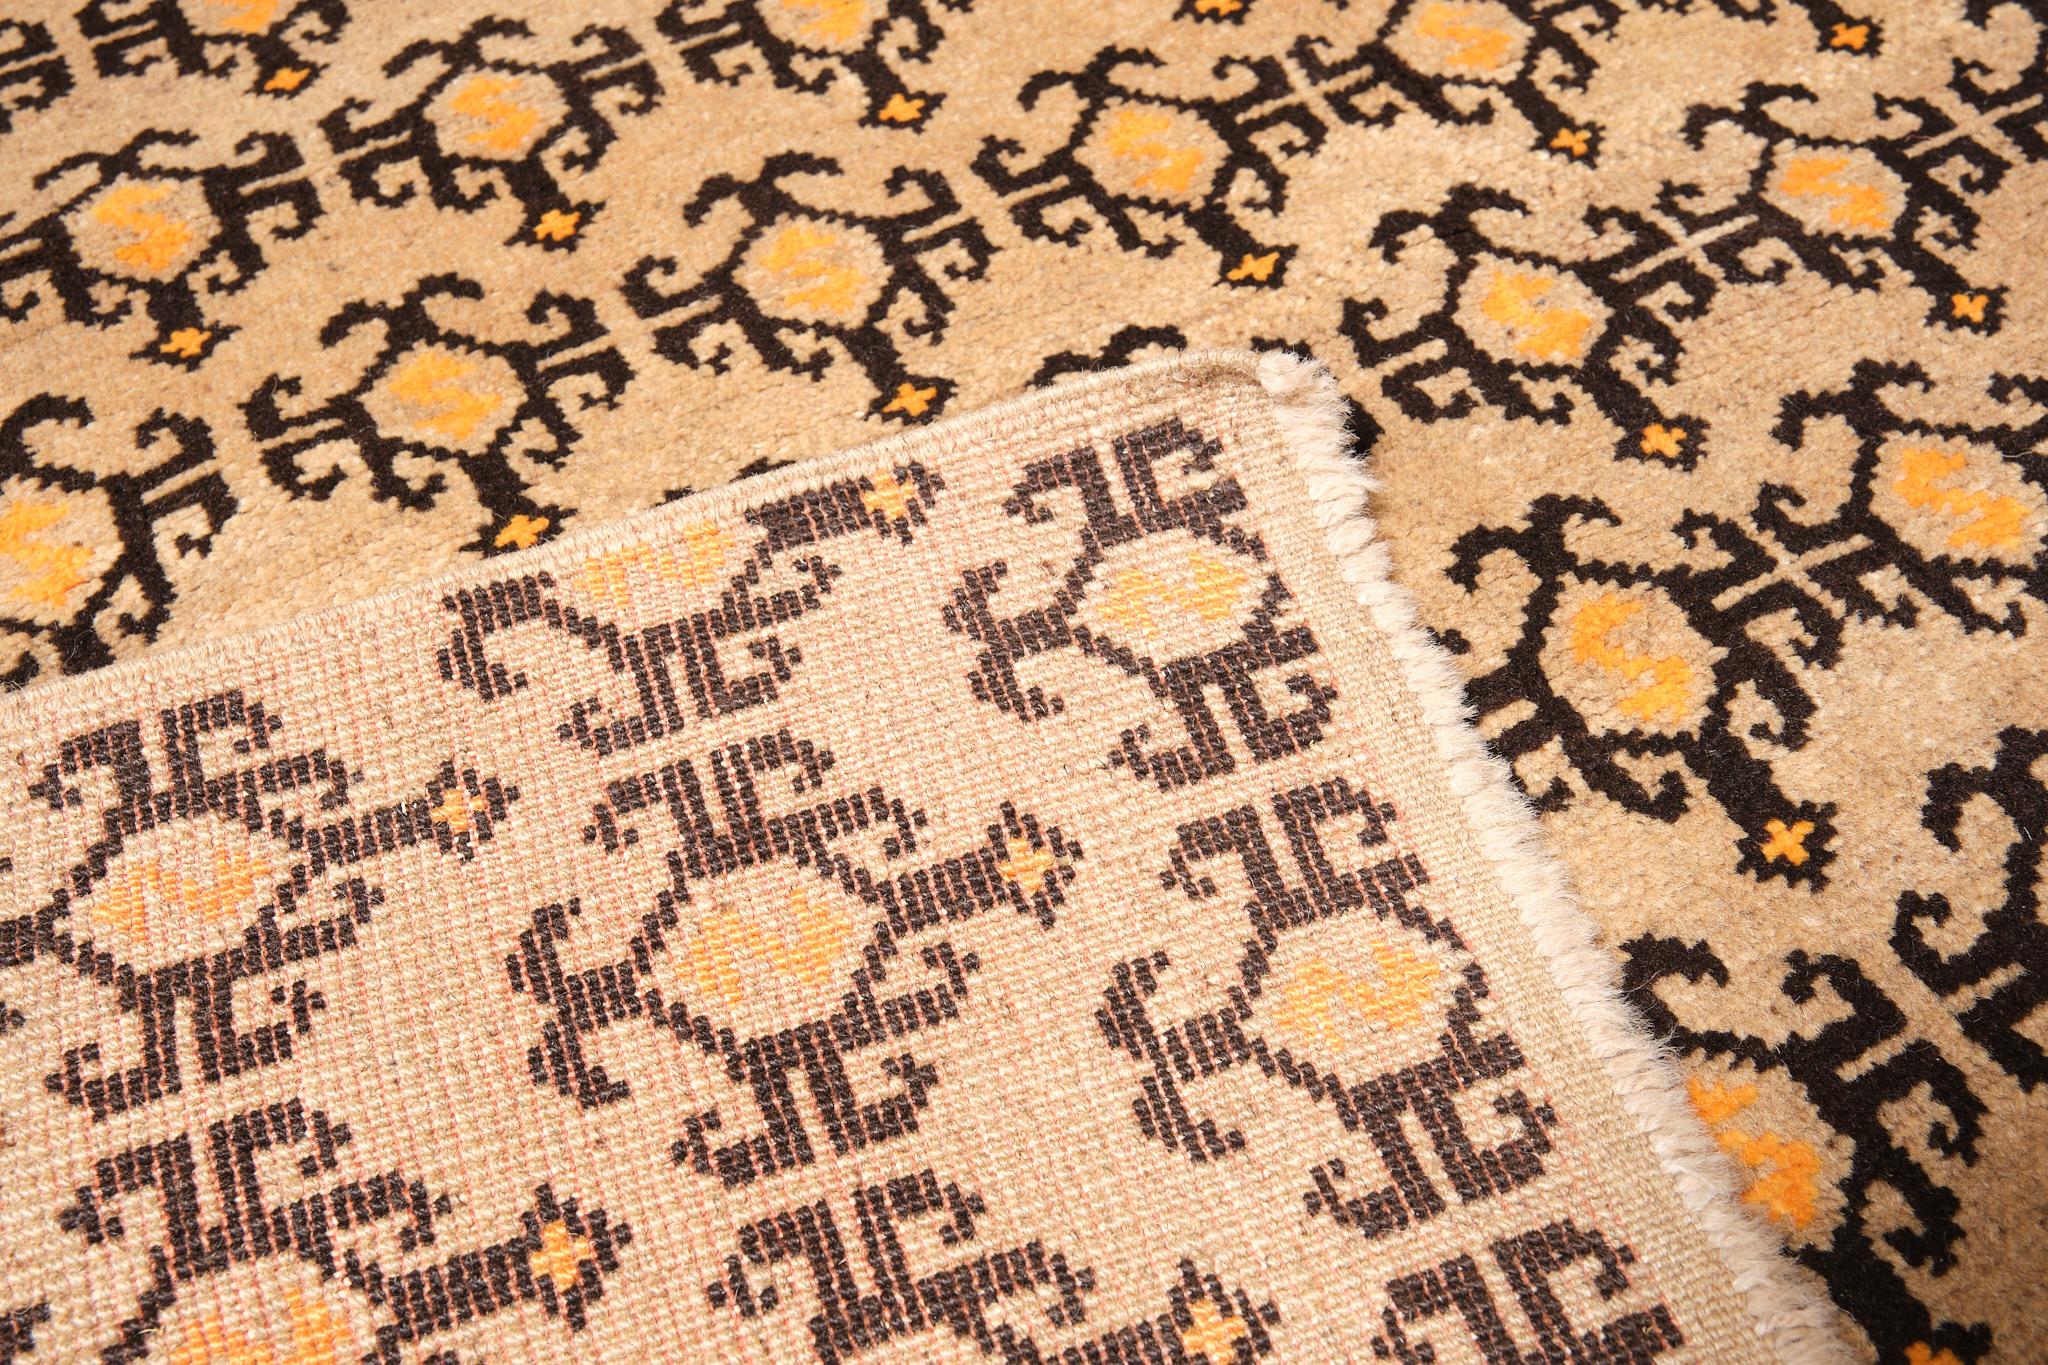 Turkish Ararat Rugs the Alaeddin Mosque Clouds Carpet Seljuk Revival Rug Natural Dyed For Sale